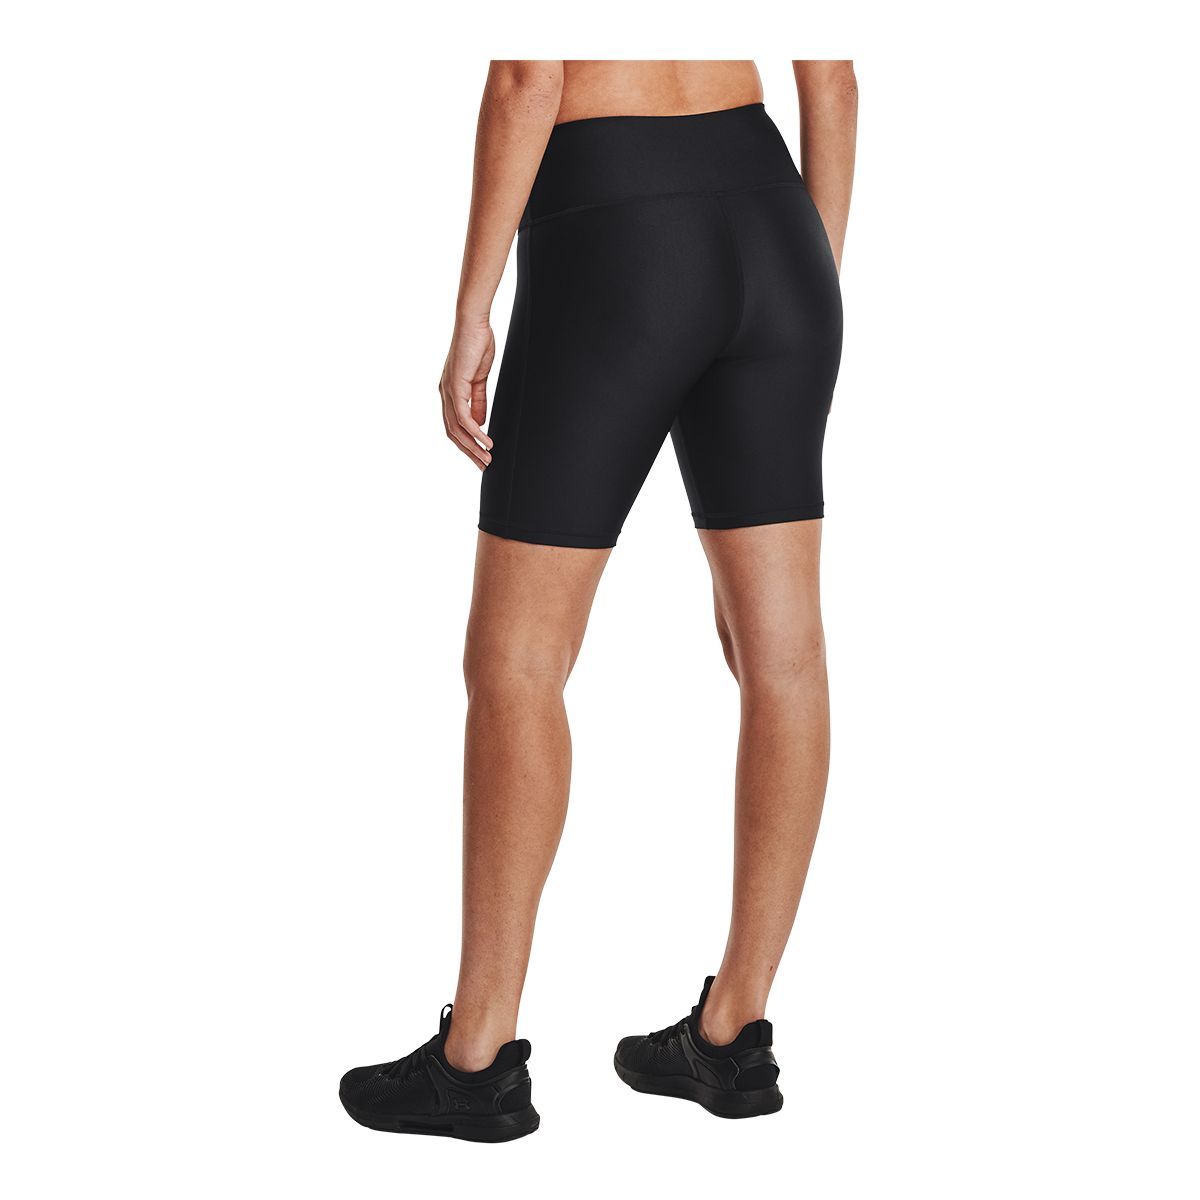 Buy UNDER ARMOUR Women Black & White Heat Gear Printed Training Shorts -  Shorts for Women 7610511